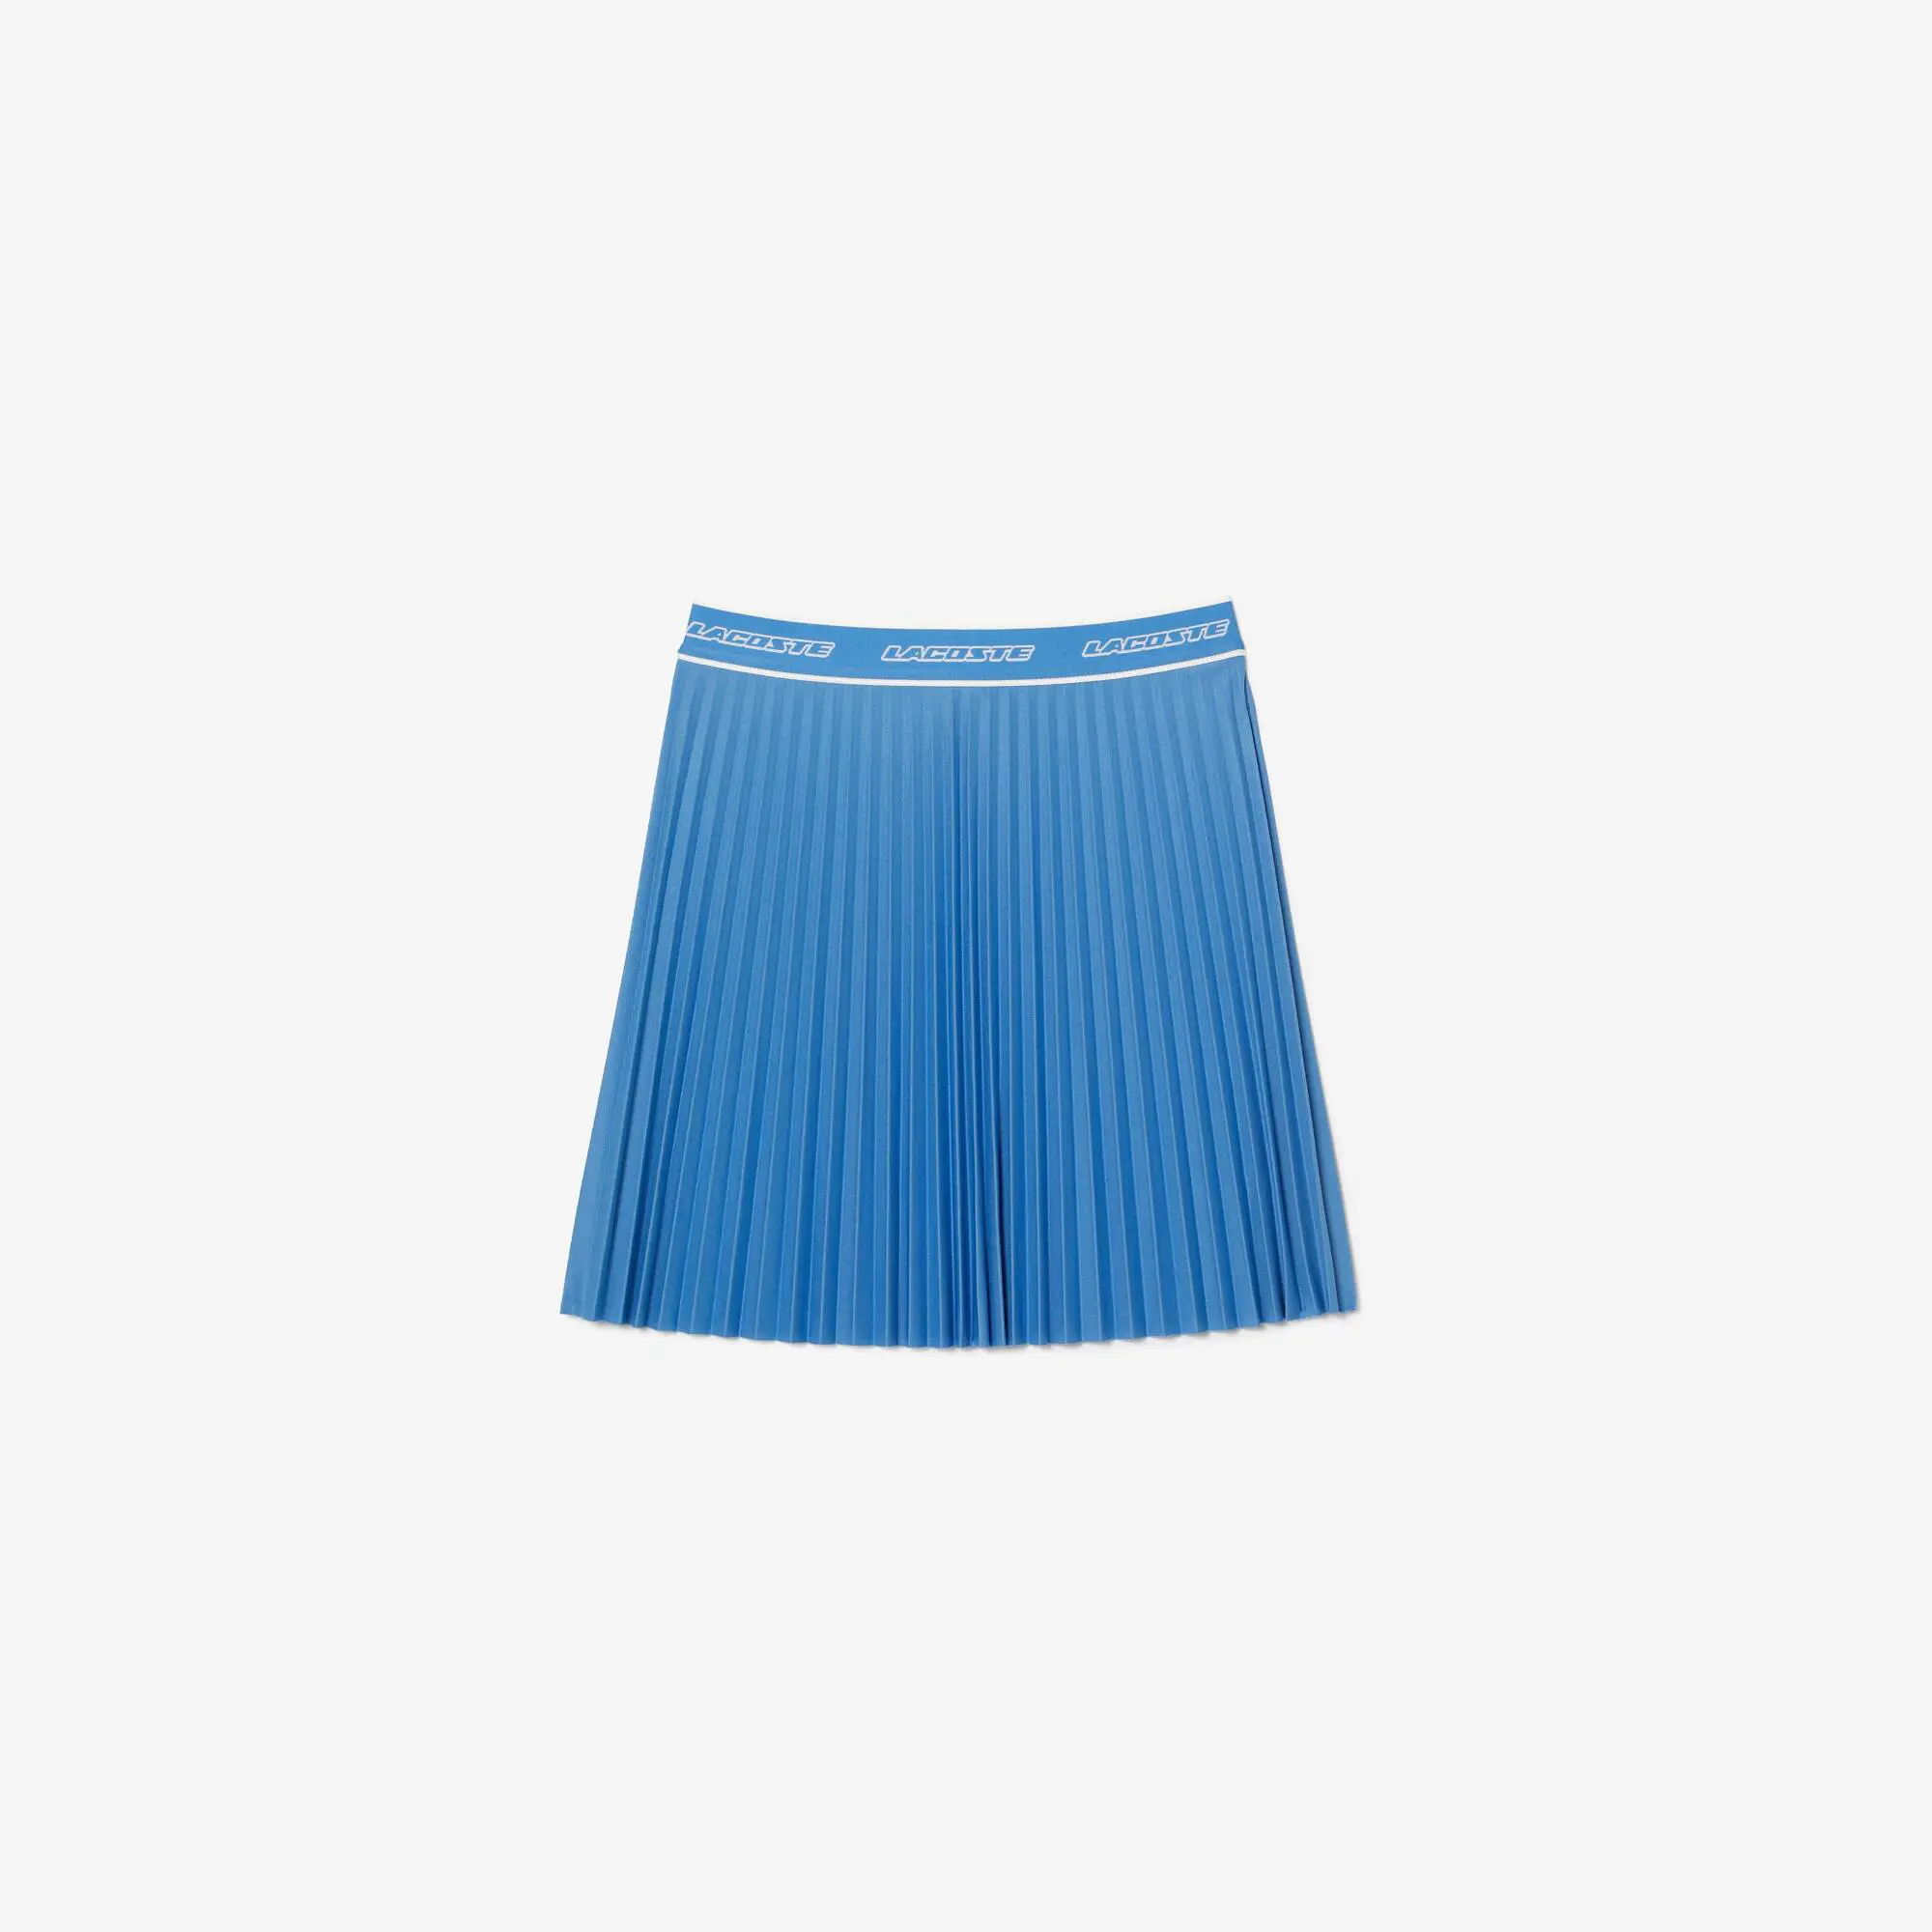 Lacoste Women's Lacoste Elasticised Waist Short Pleated Skirt. 2